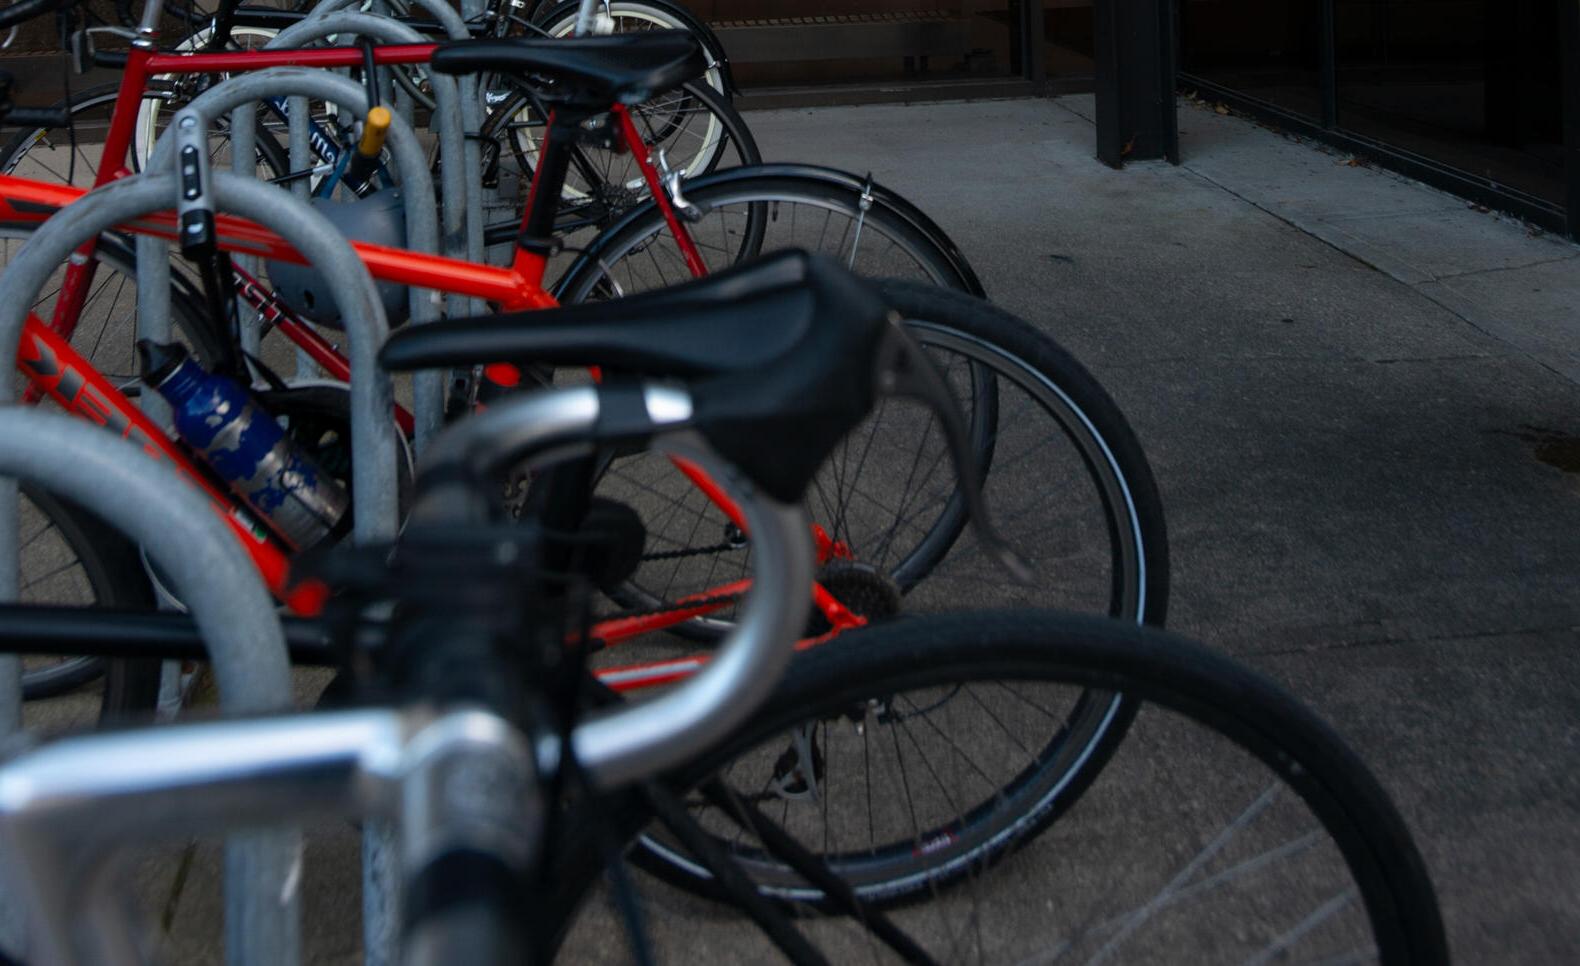 Bikes at MCAD's bike rack